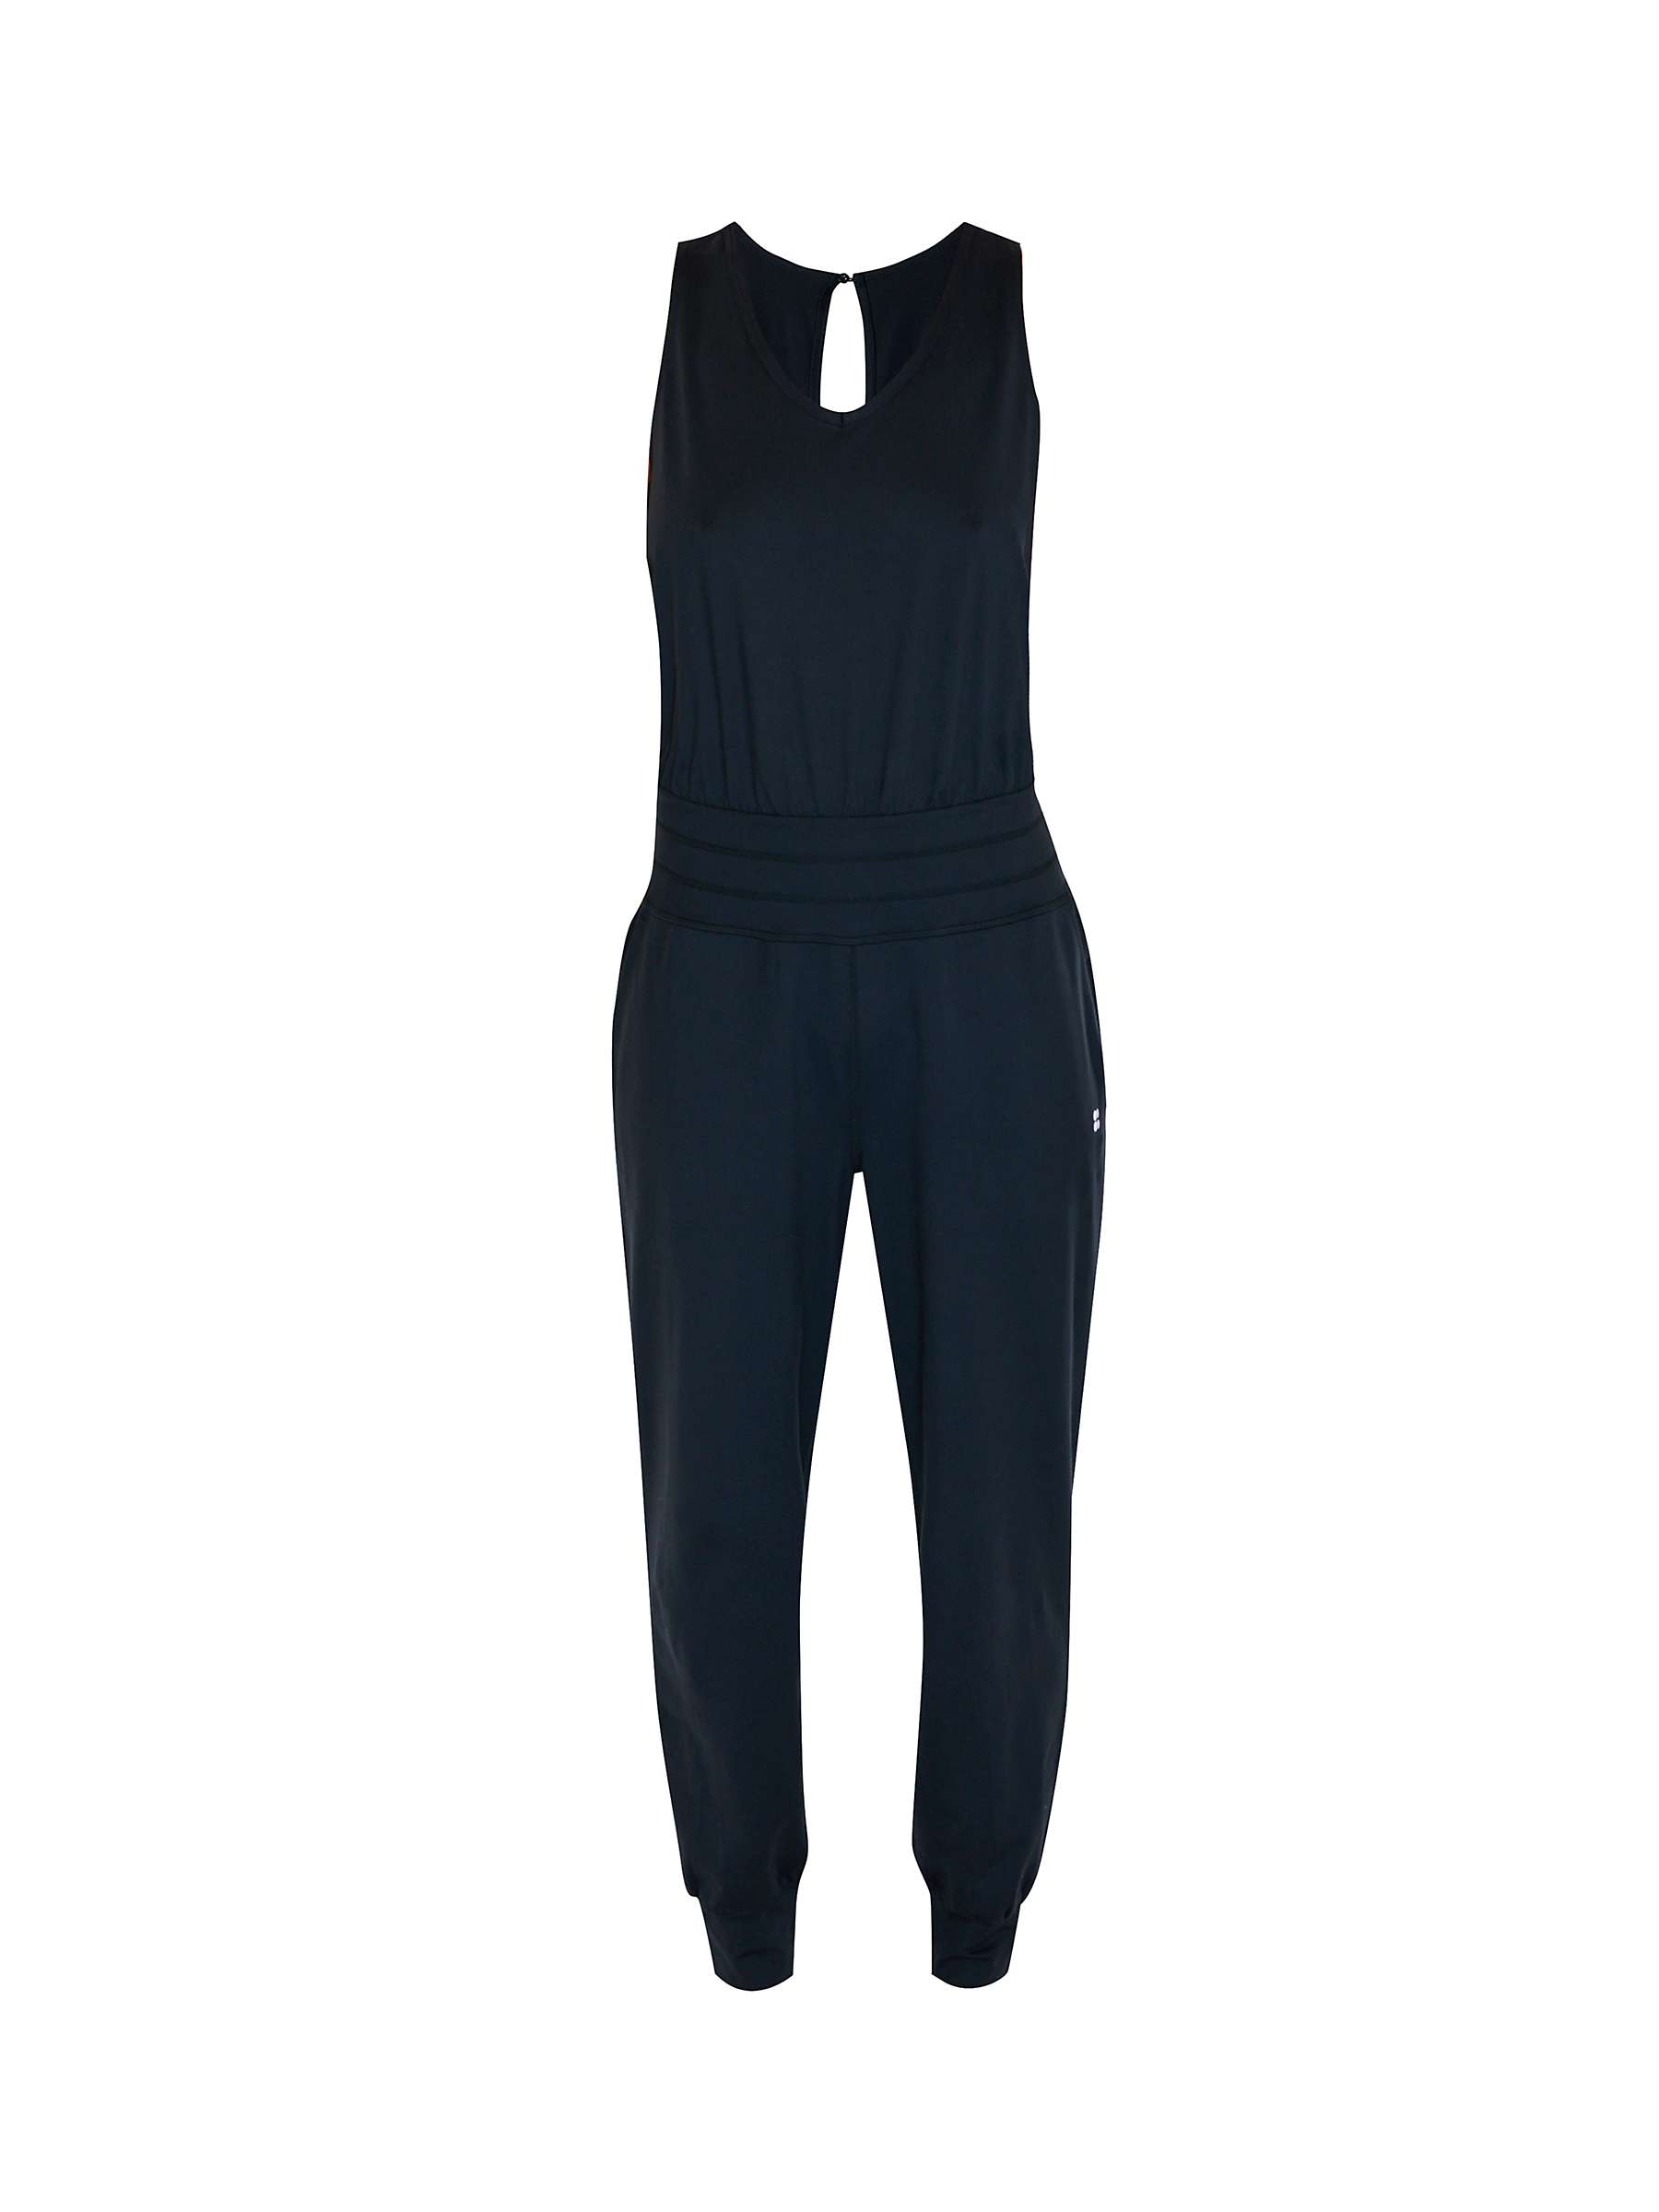 Buy Sweaty Betty Gaia Yoga Jumpsuit, Black Online at johnlewis.com